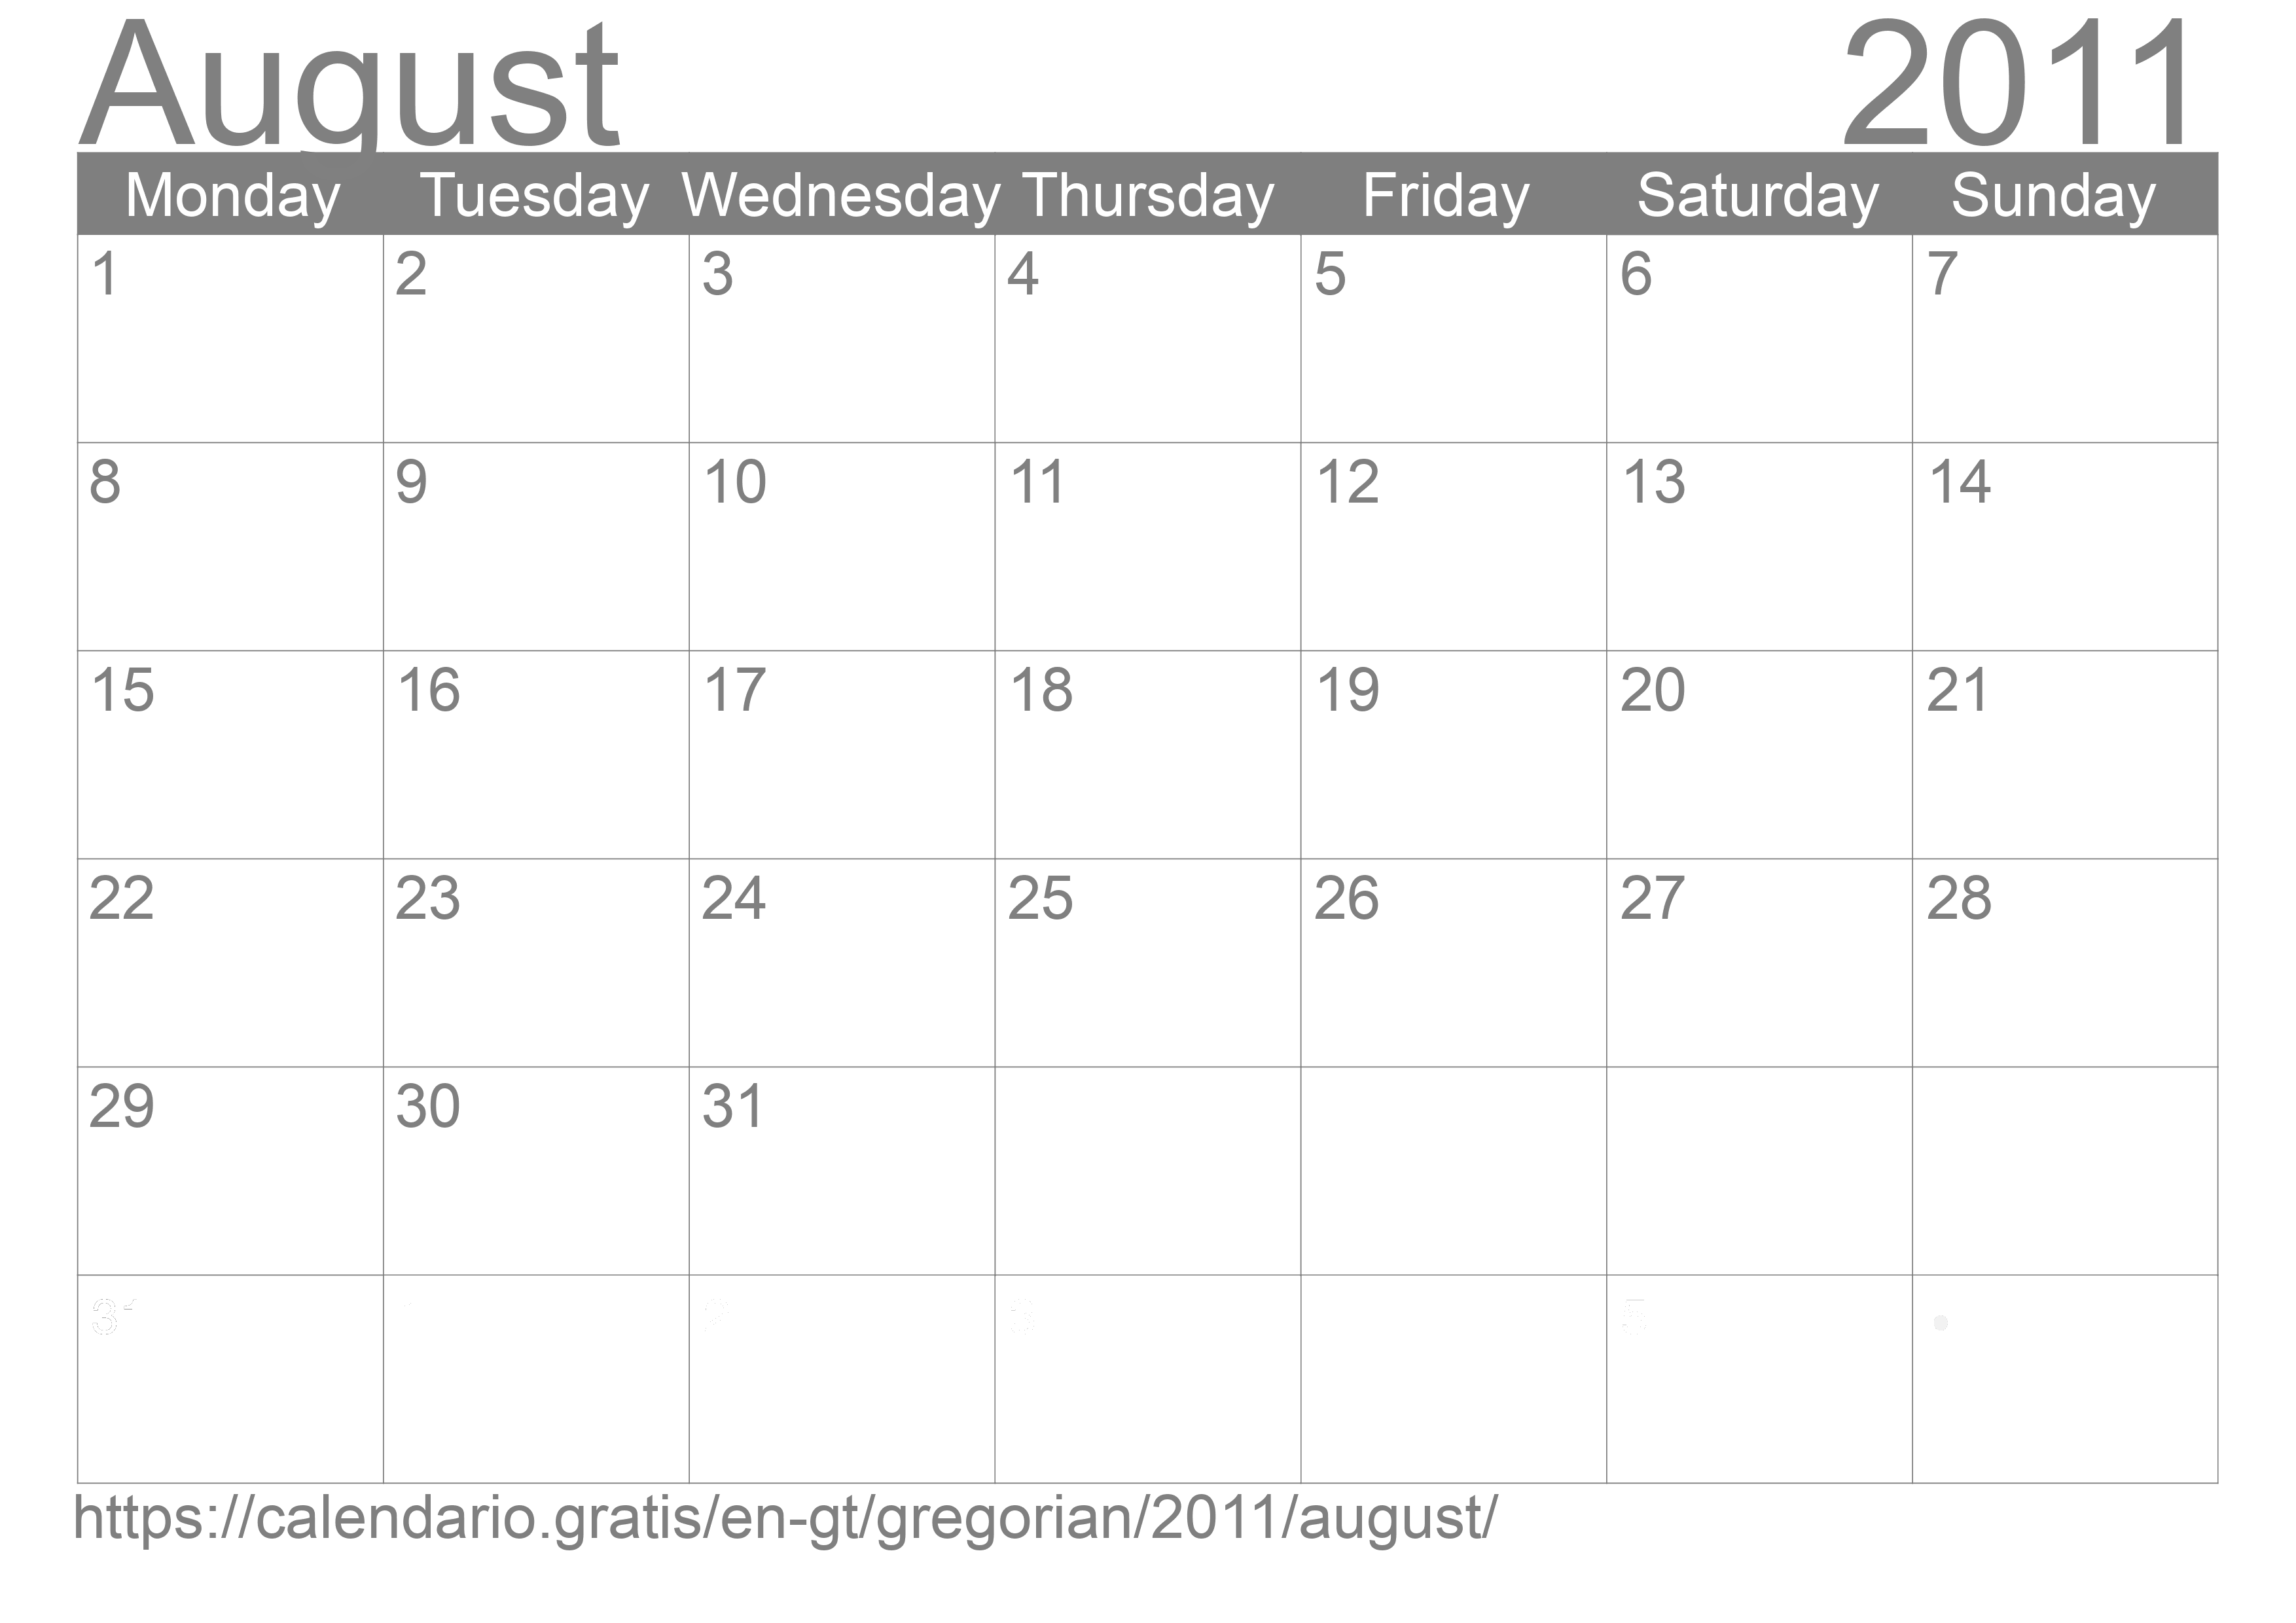 Calendar August 2011 to print